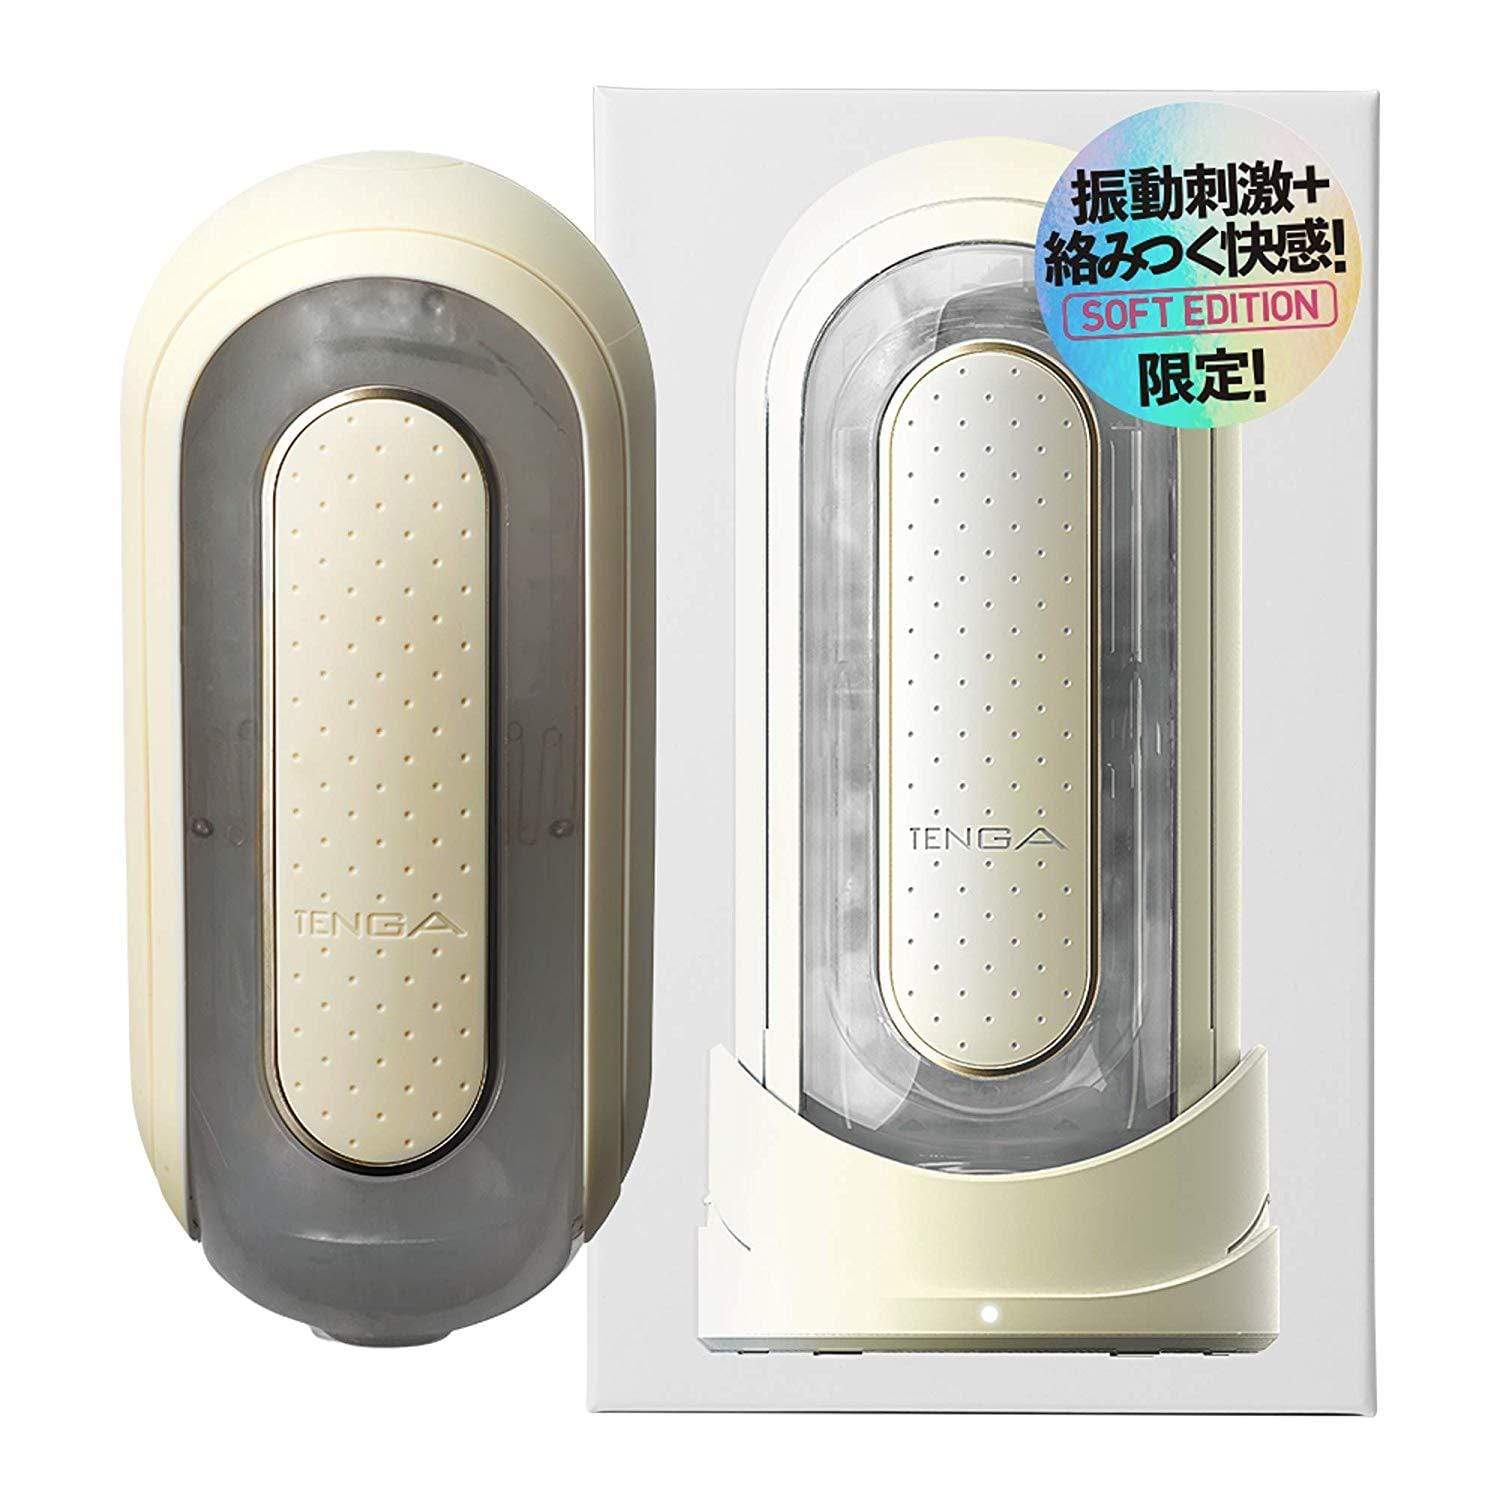 Tenga - Flip 0 Electronic Vibration Soft Edition Masturbator (Clear) -  Masturbator Soft Stroker (Non Vibration)  Durio.sg